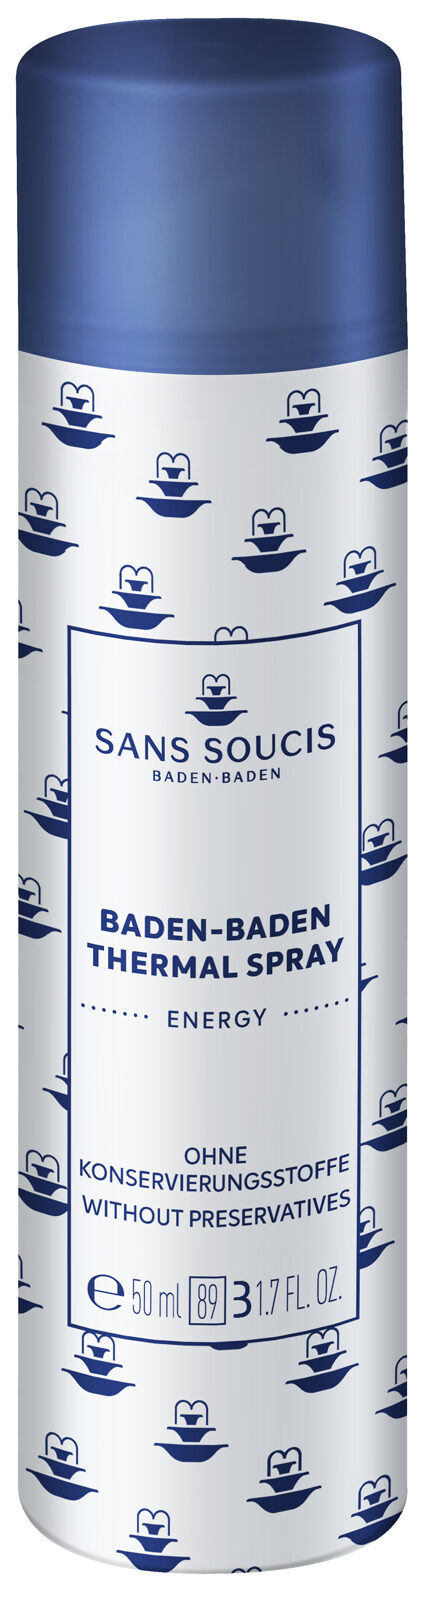 BADEN-BADEN THERMAL SPRAY • 50ML